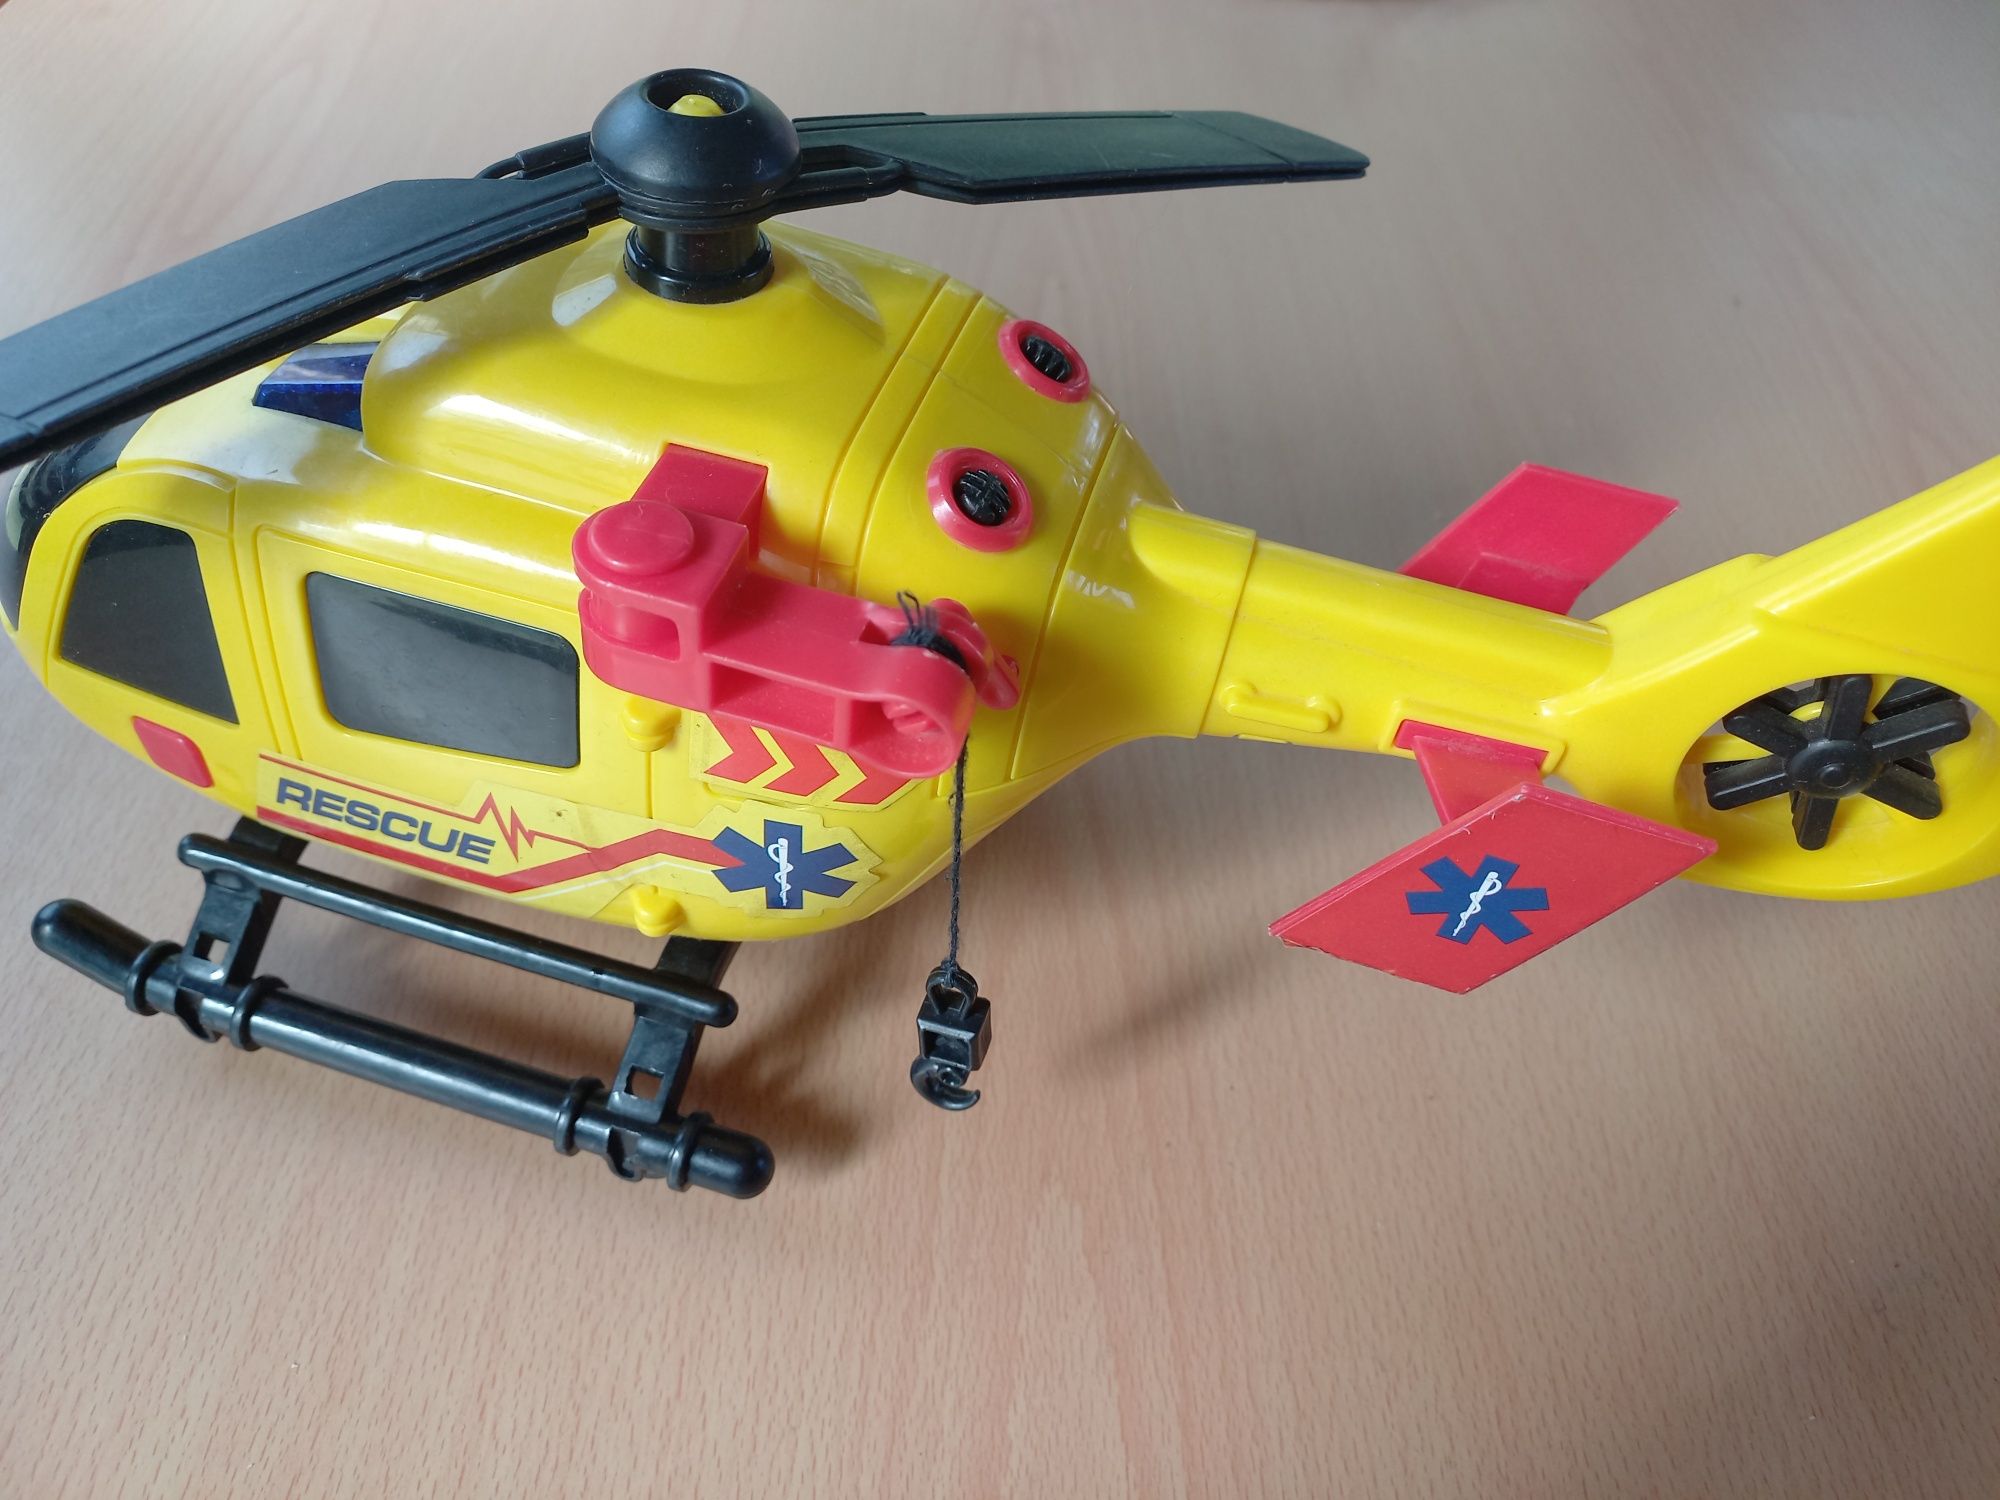 Jucarie elocopter Rescue marca Jumbo cu sirene